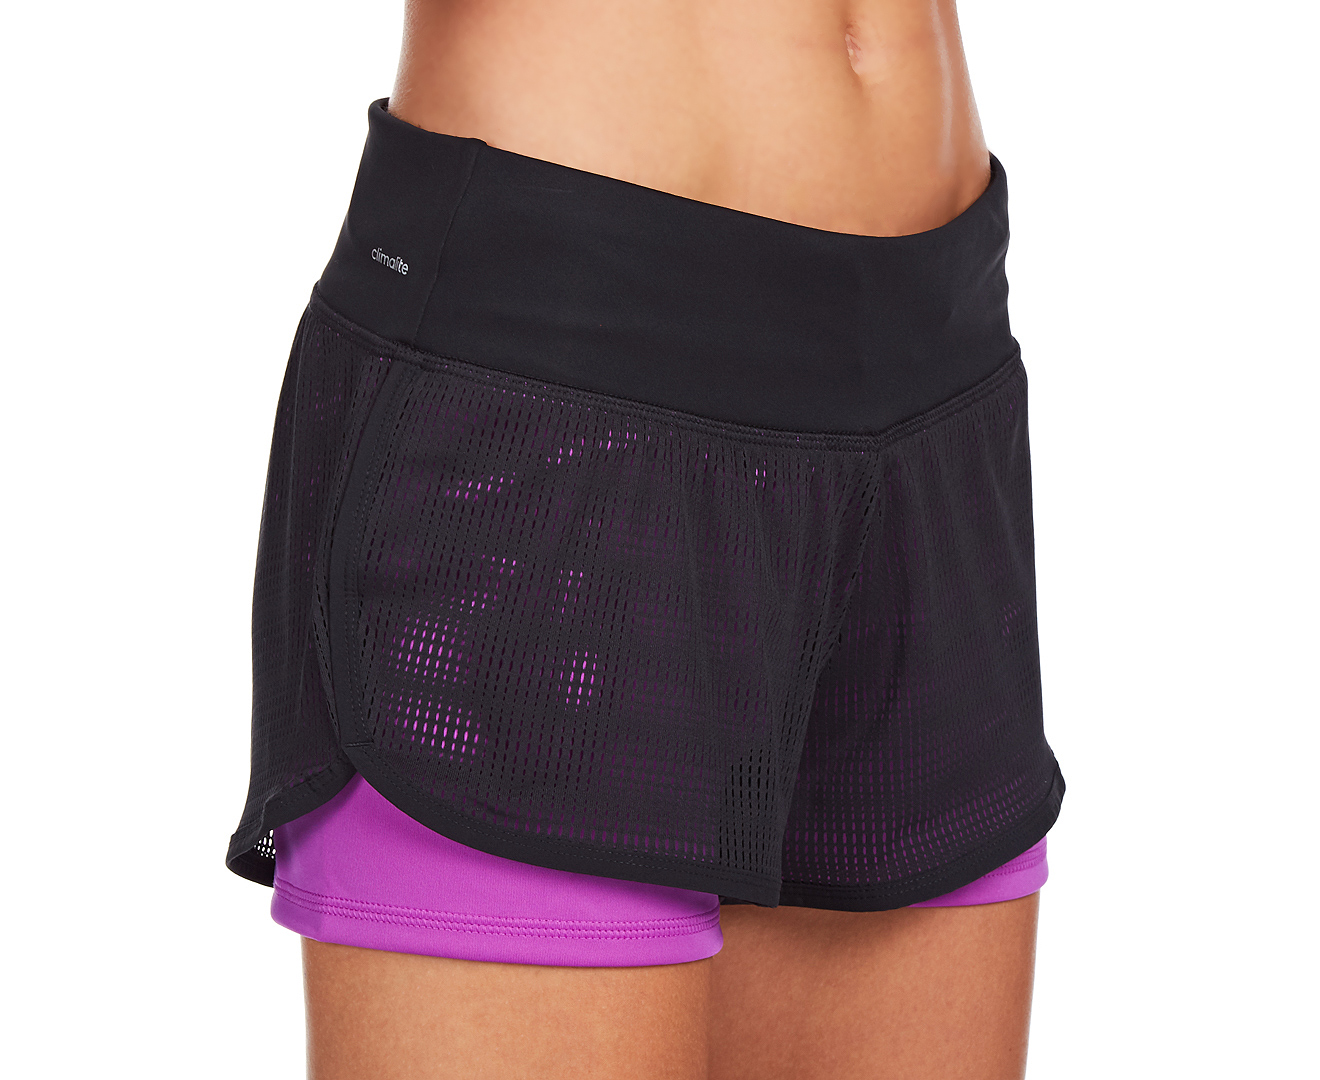 Download Adidas Women's Gym 2-in-1 Mesh Shorts - Black | Scoopon ...